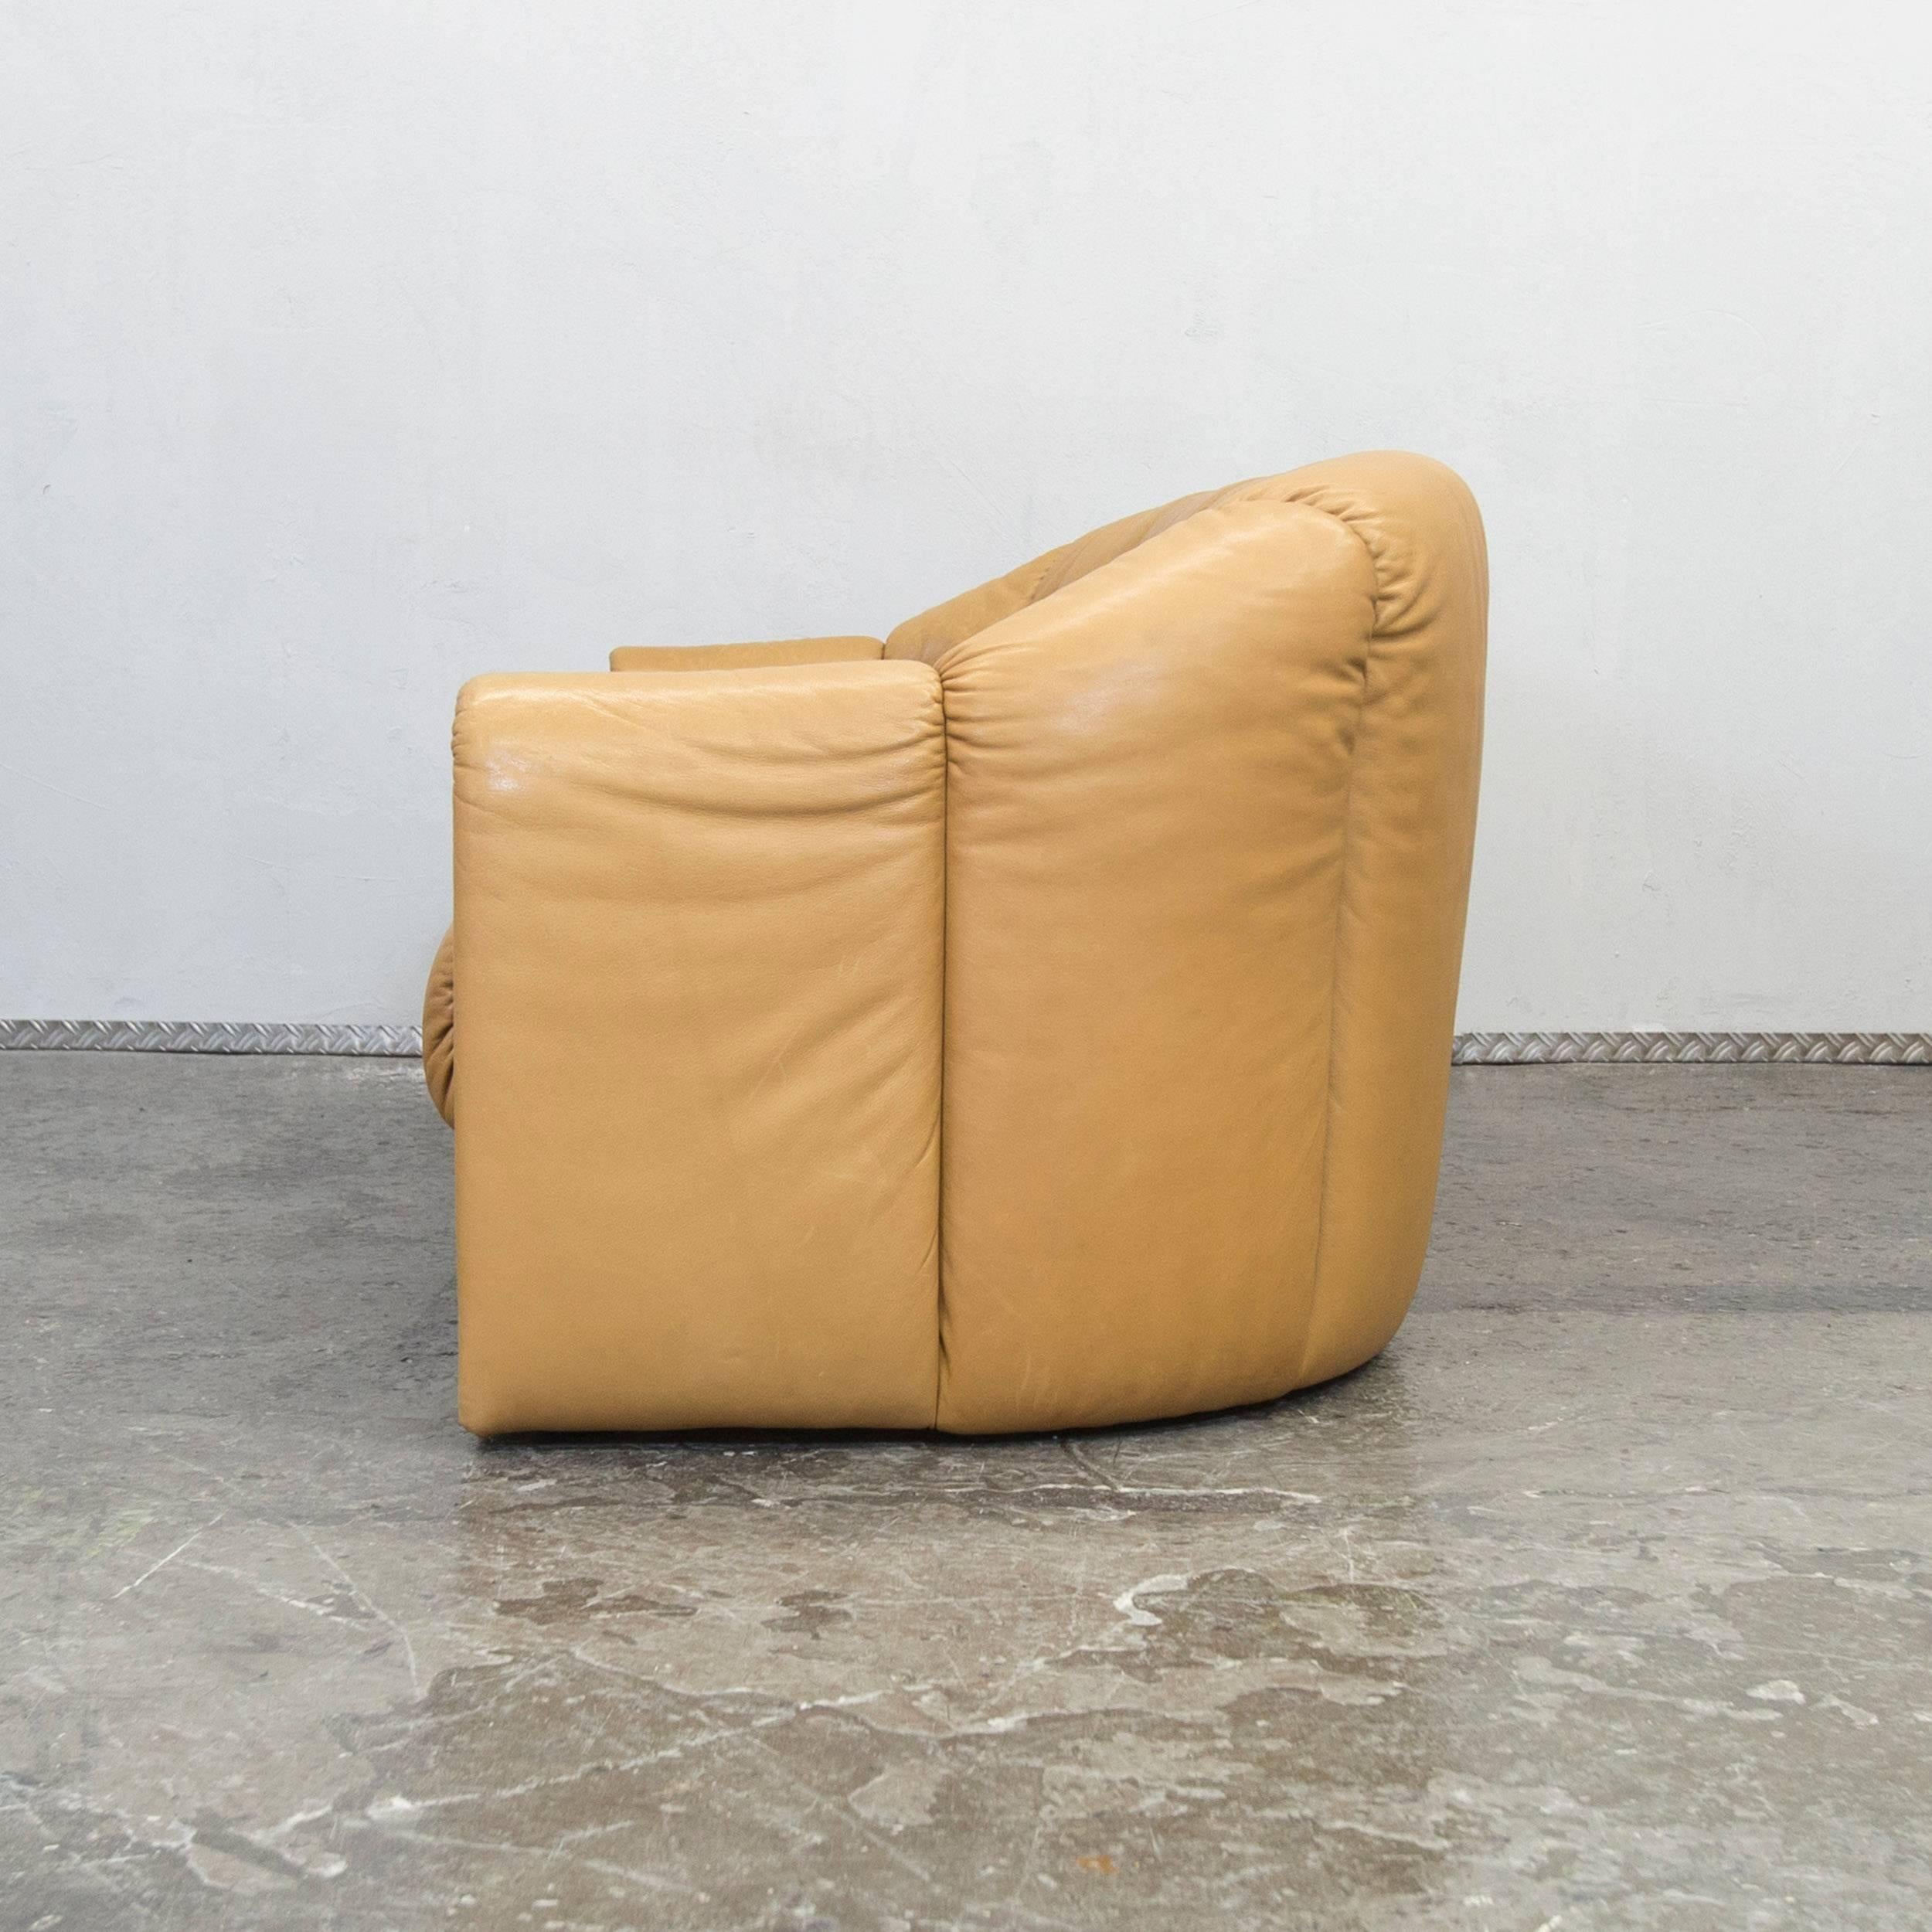 COR Designer Leather Sofa Brown Three-Seat Couch Vintage Retro 2